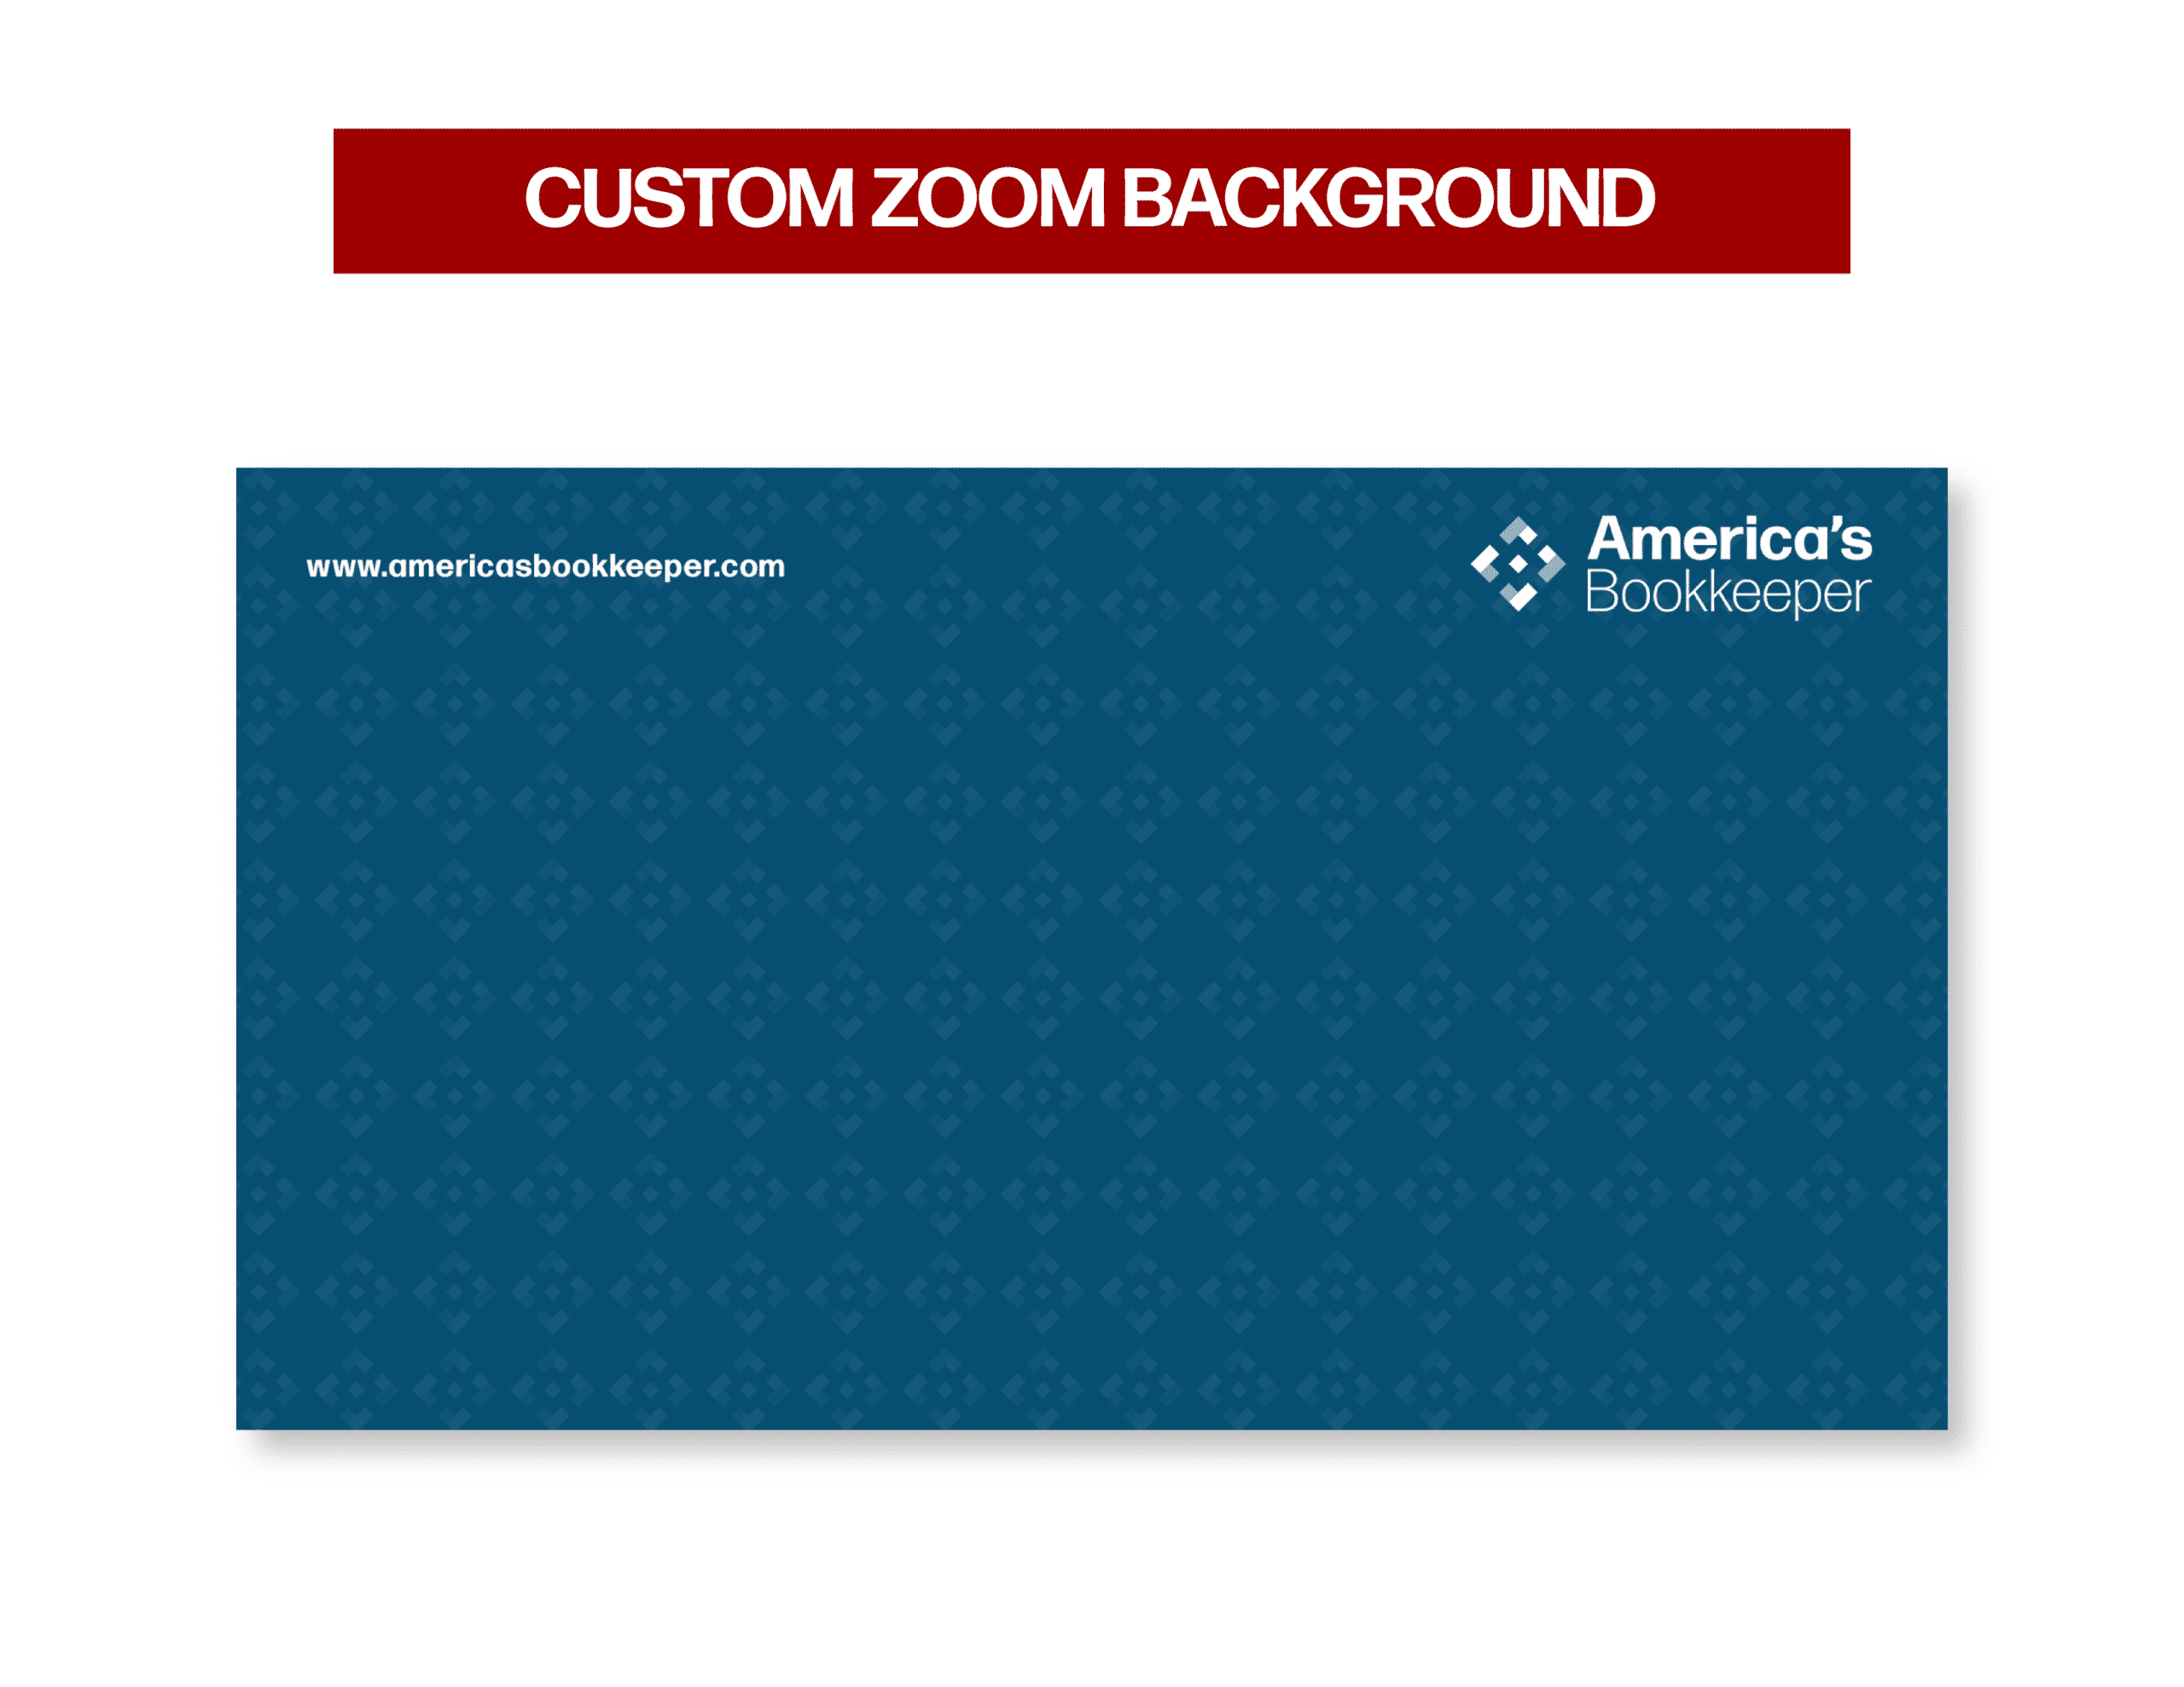 07Americas__Custom Zoom Background